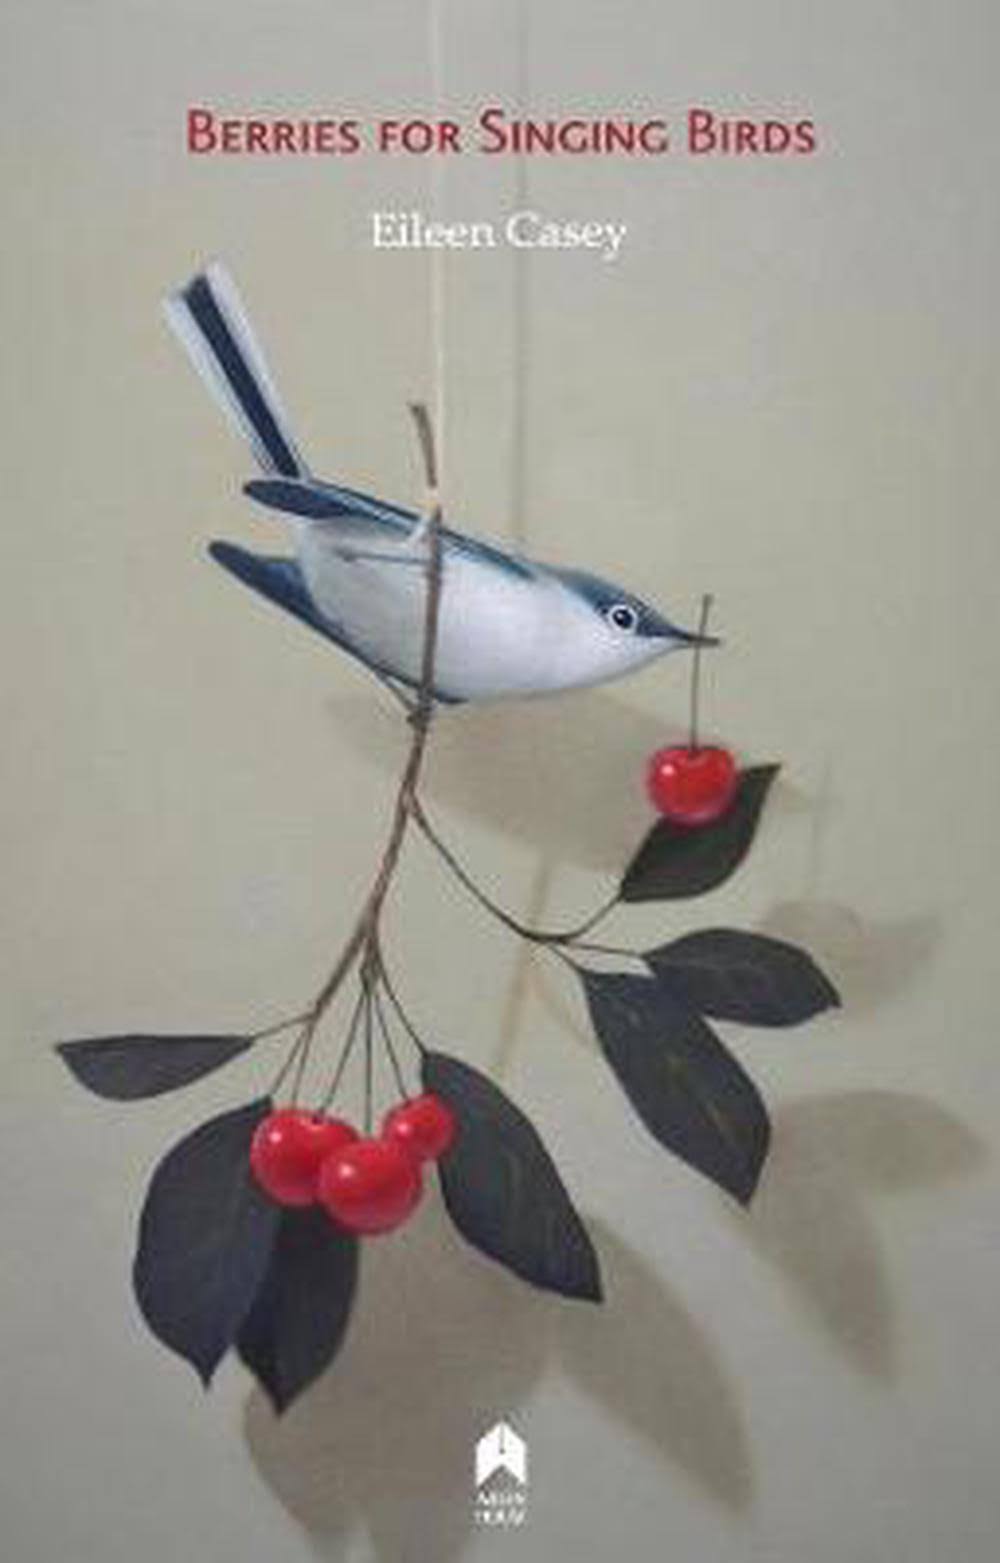 Berries for Singing Birds by Eileen Casey